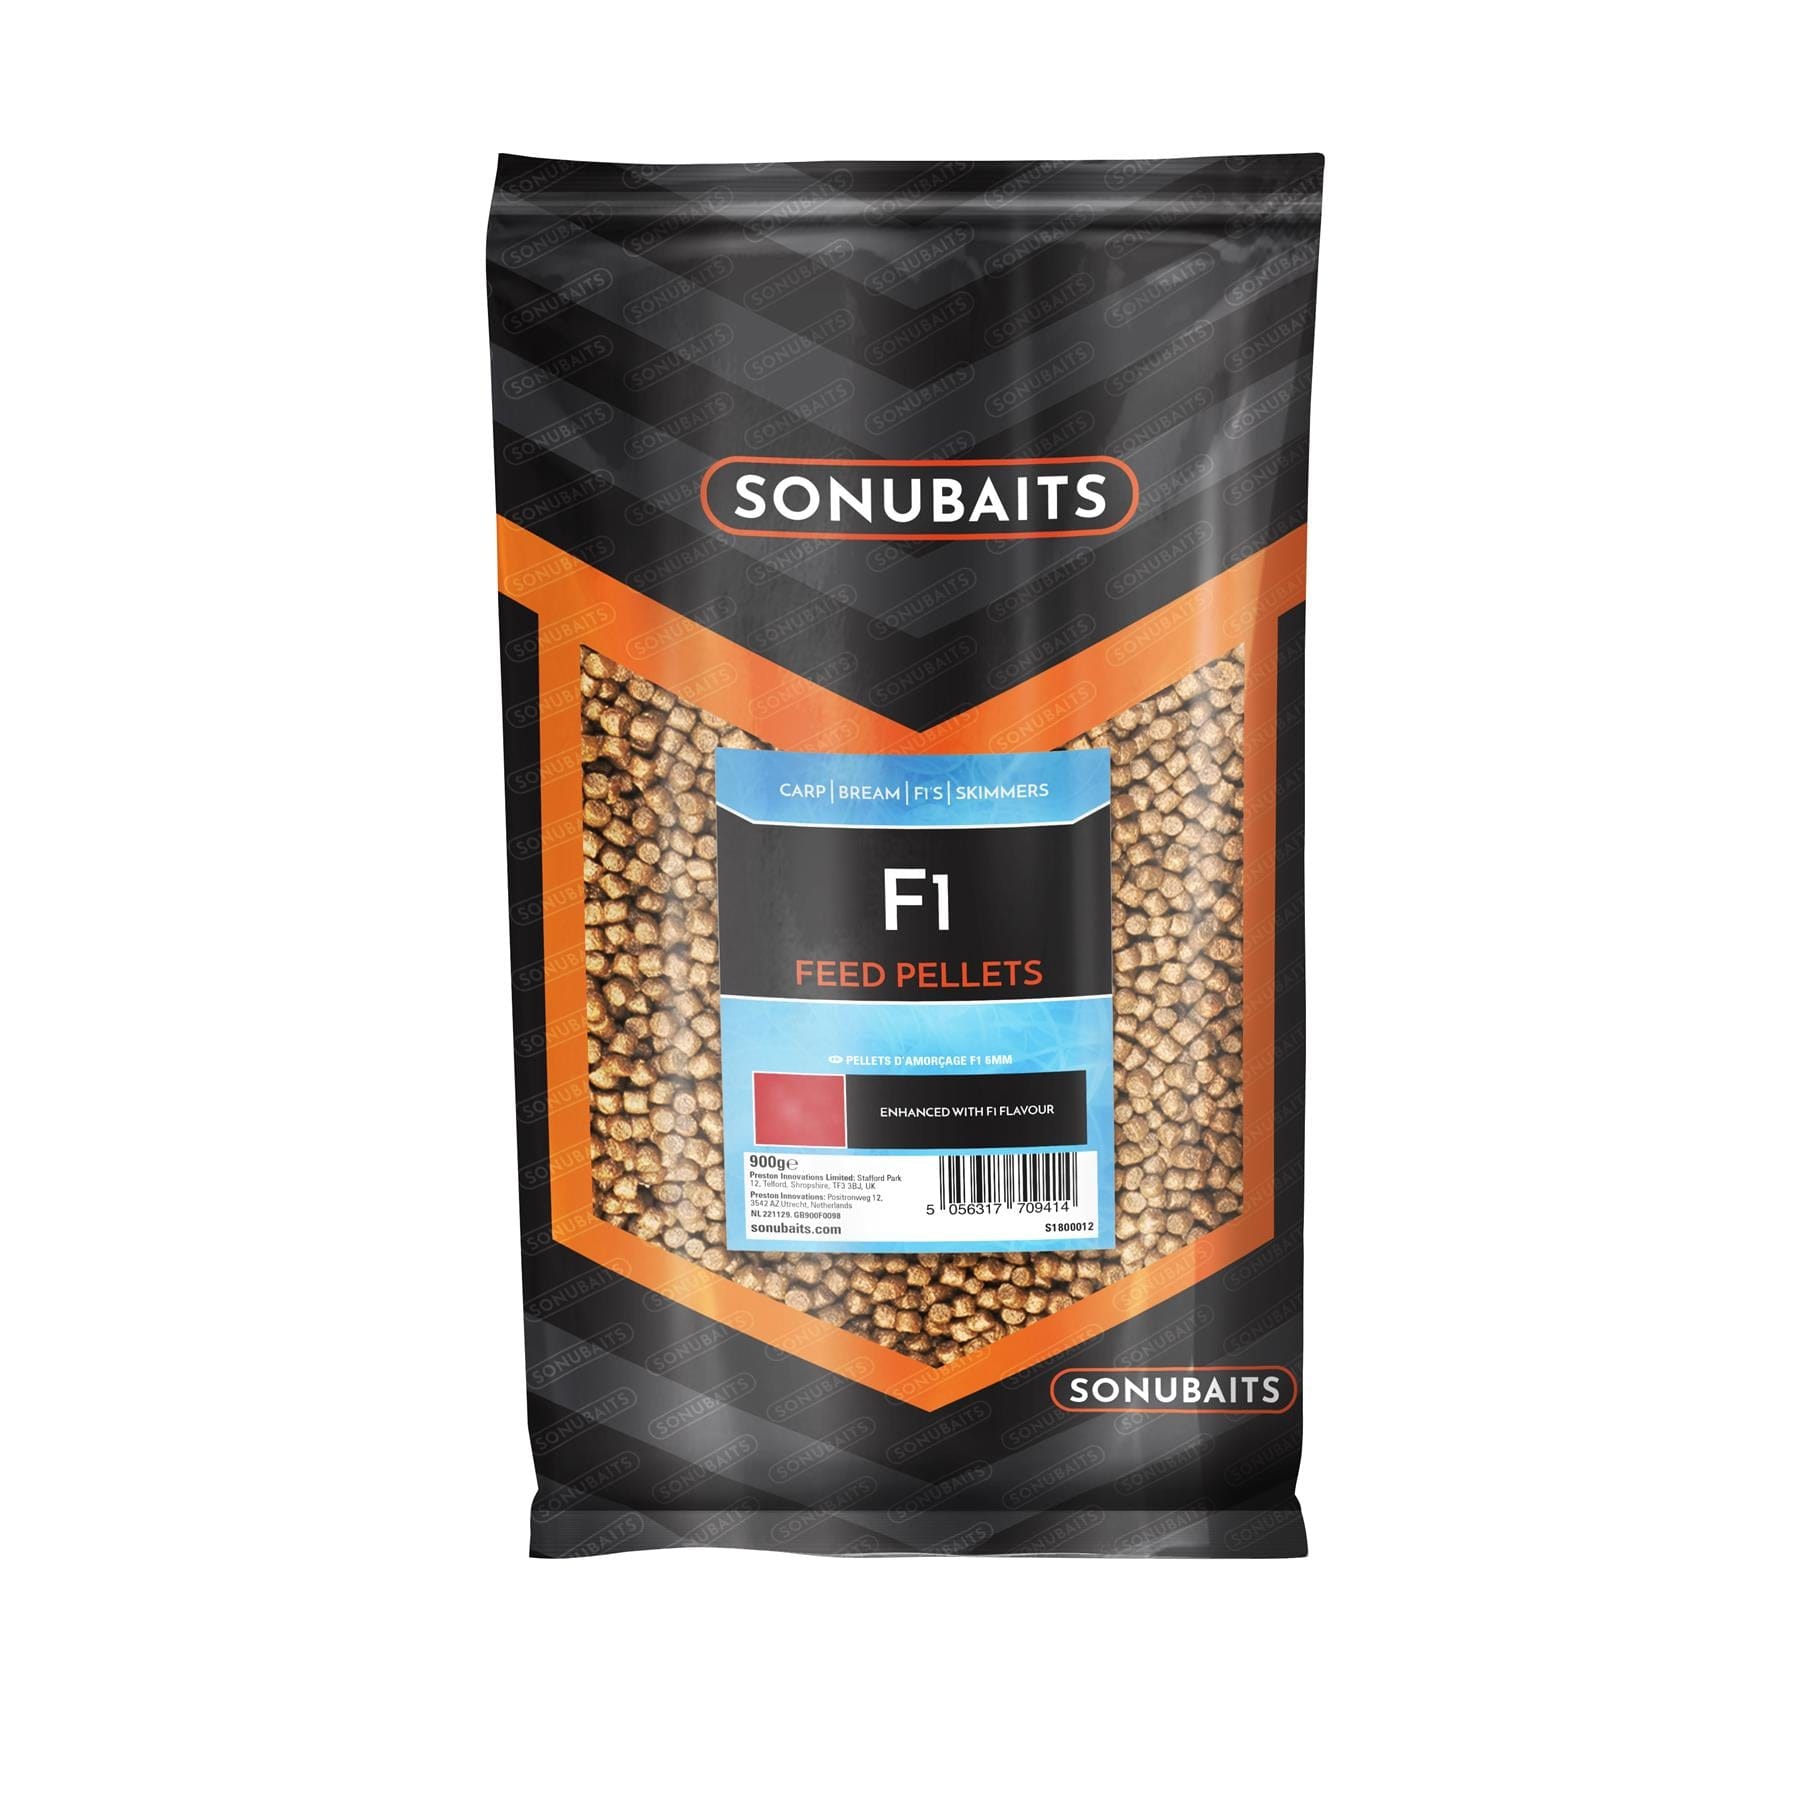 Sonubaits Hookable Pro Expander Soft Hook Pellets Carp Fishing Bait - Krill  8mm